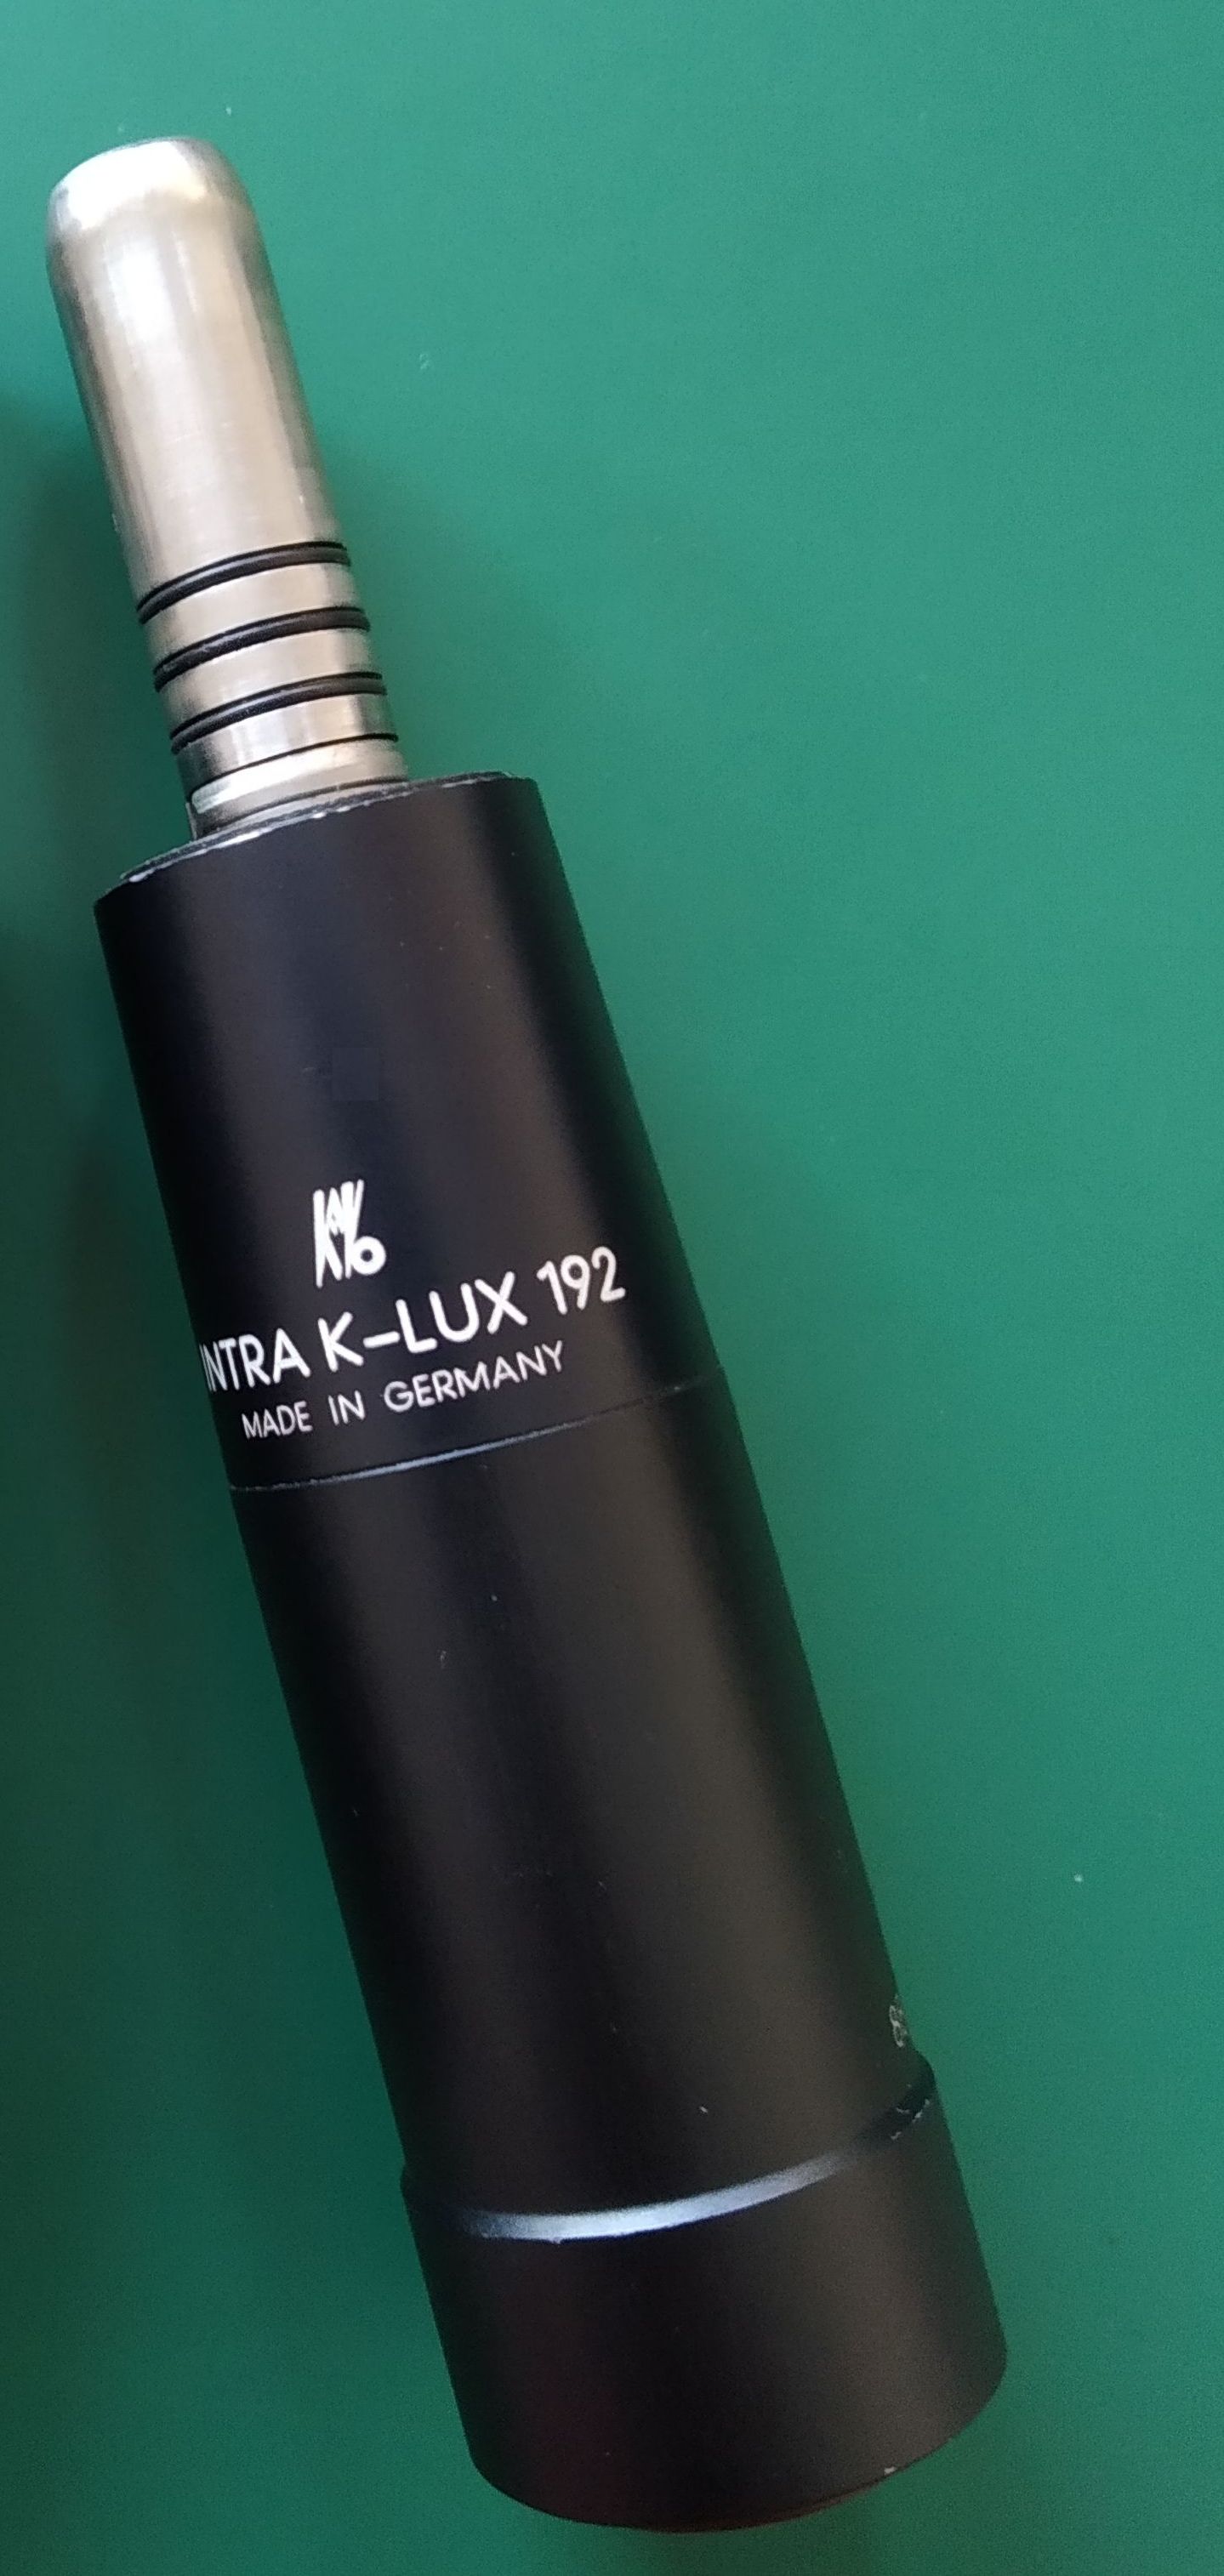 KaVo Intra K-LUX 192 LED Micromotor gebraucht. v Fachhändler getestet. Zustand neuwertig